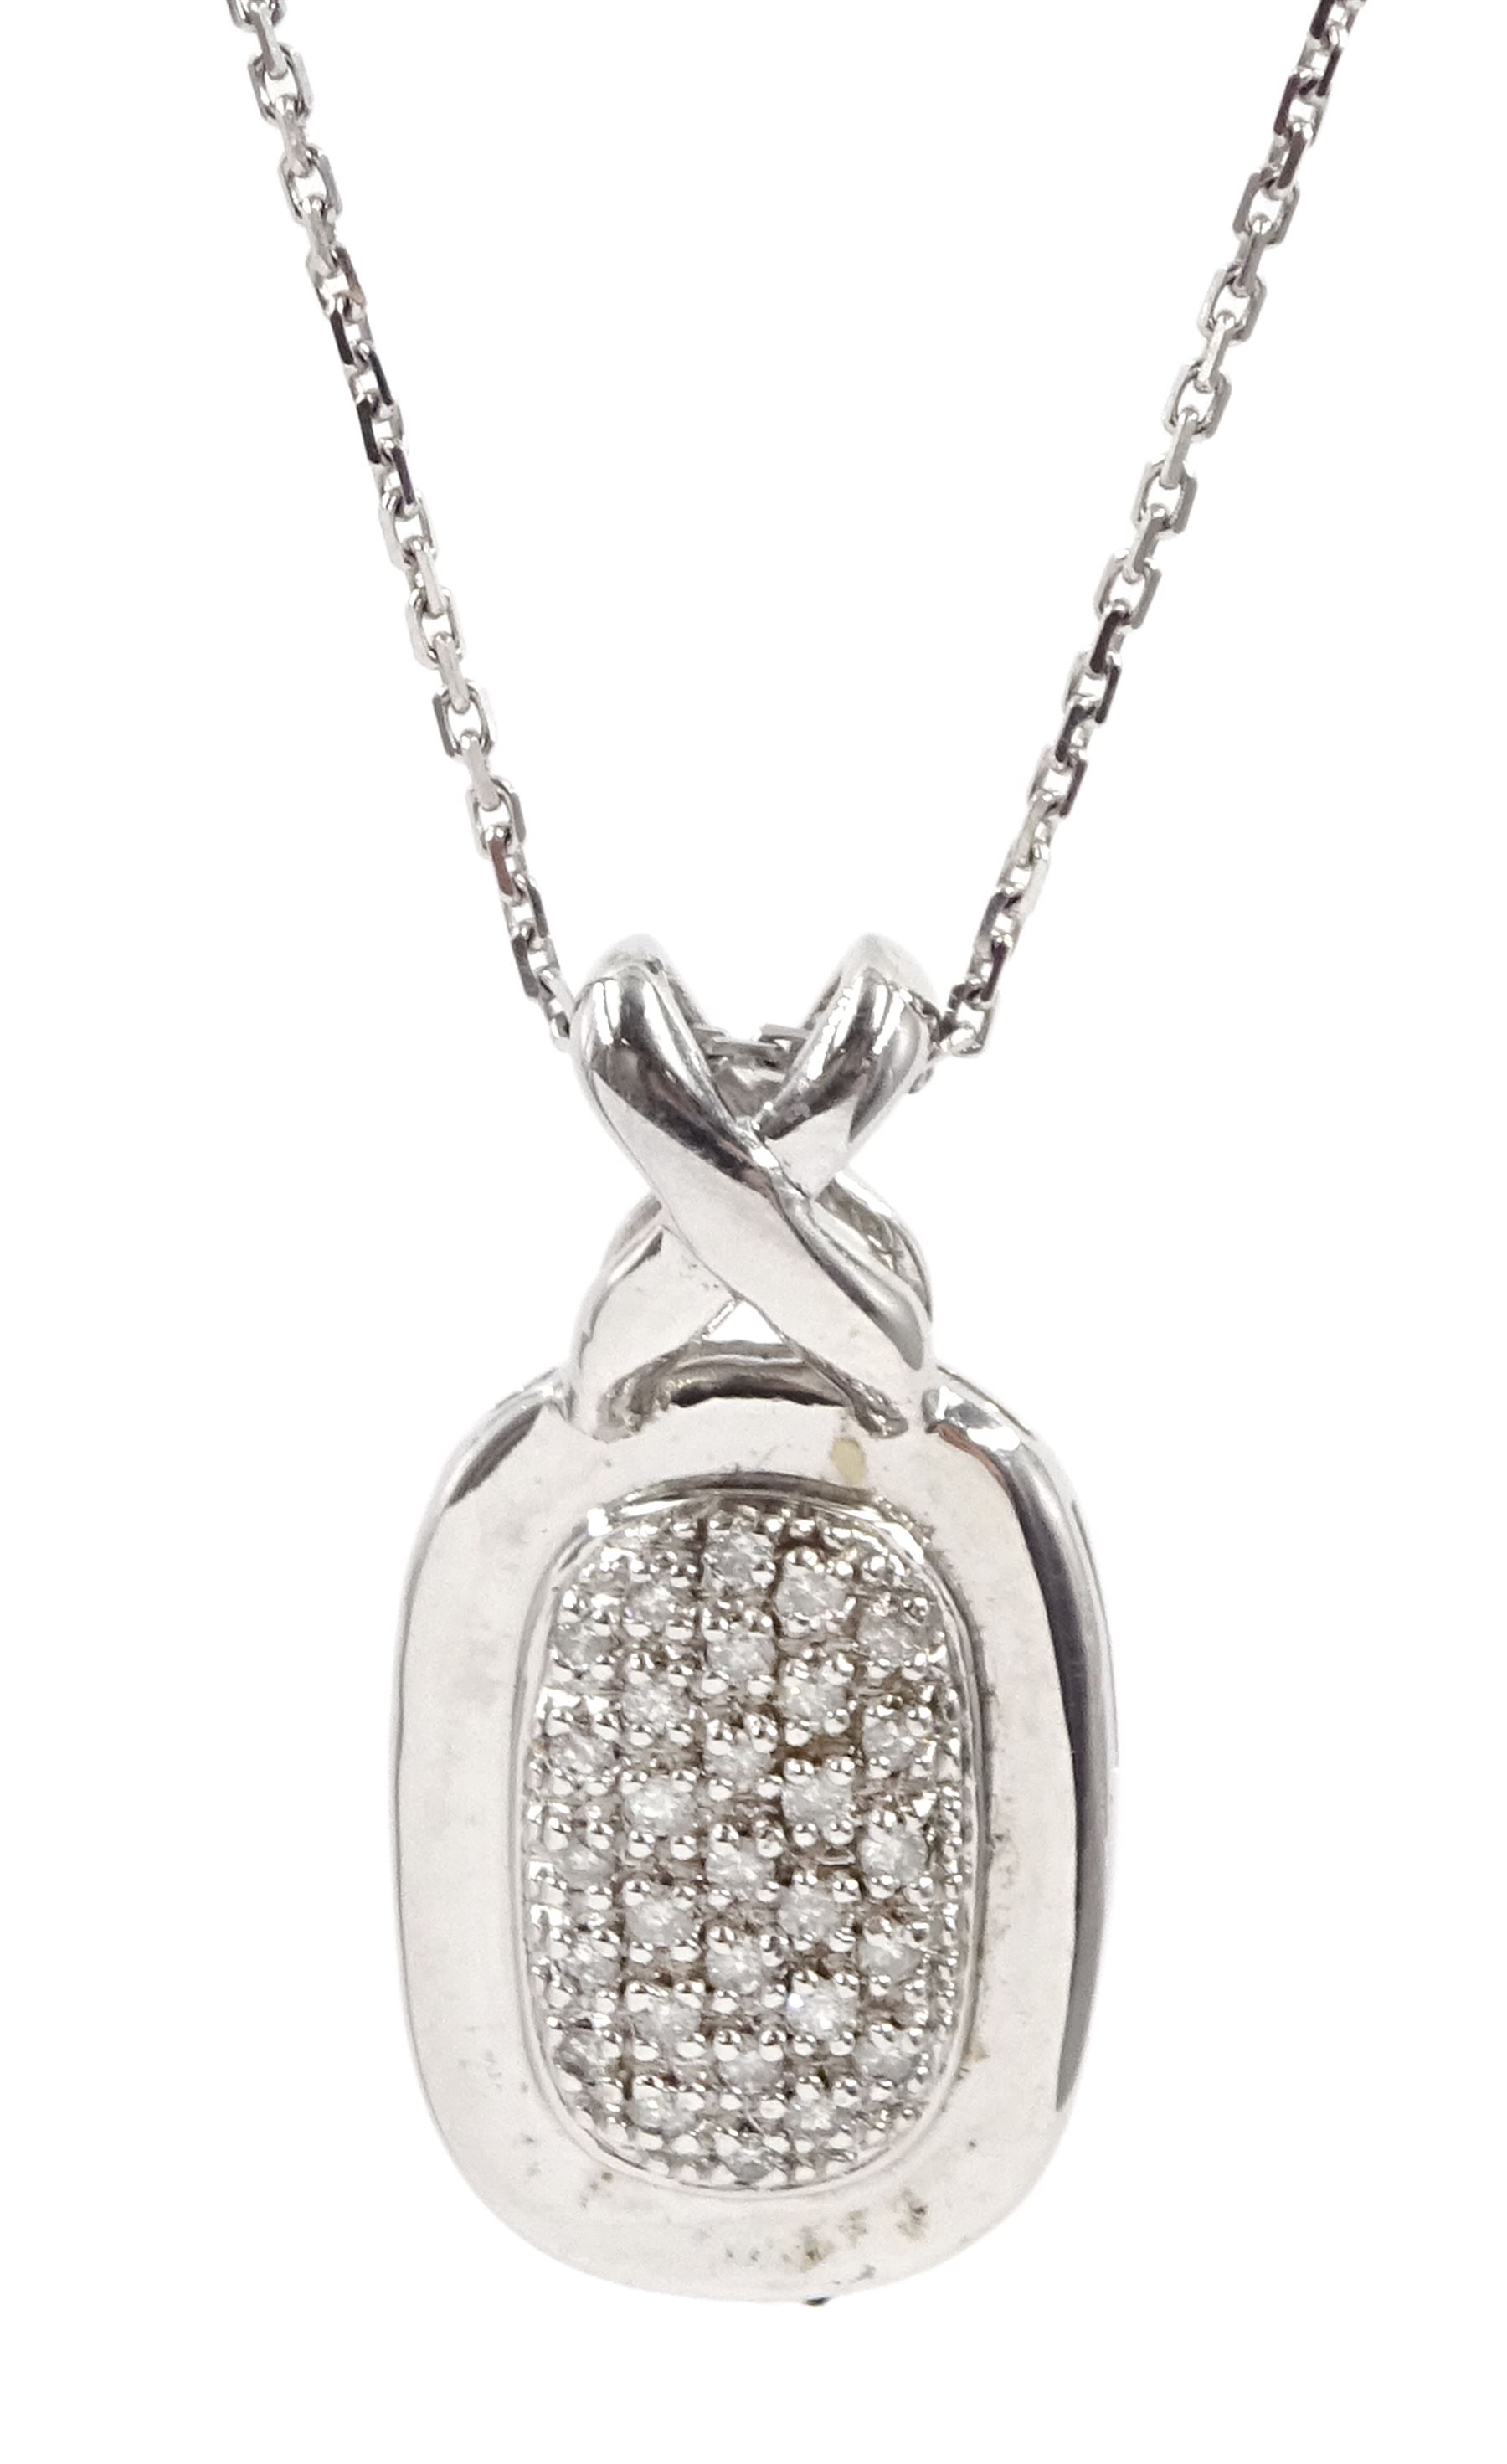 14ct white gold pave set diamond pendant